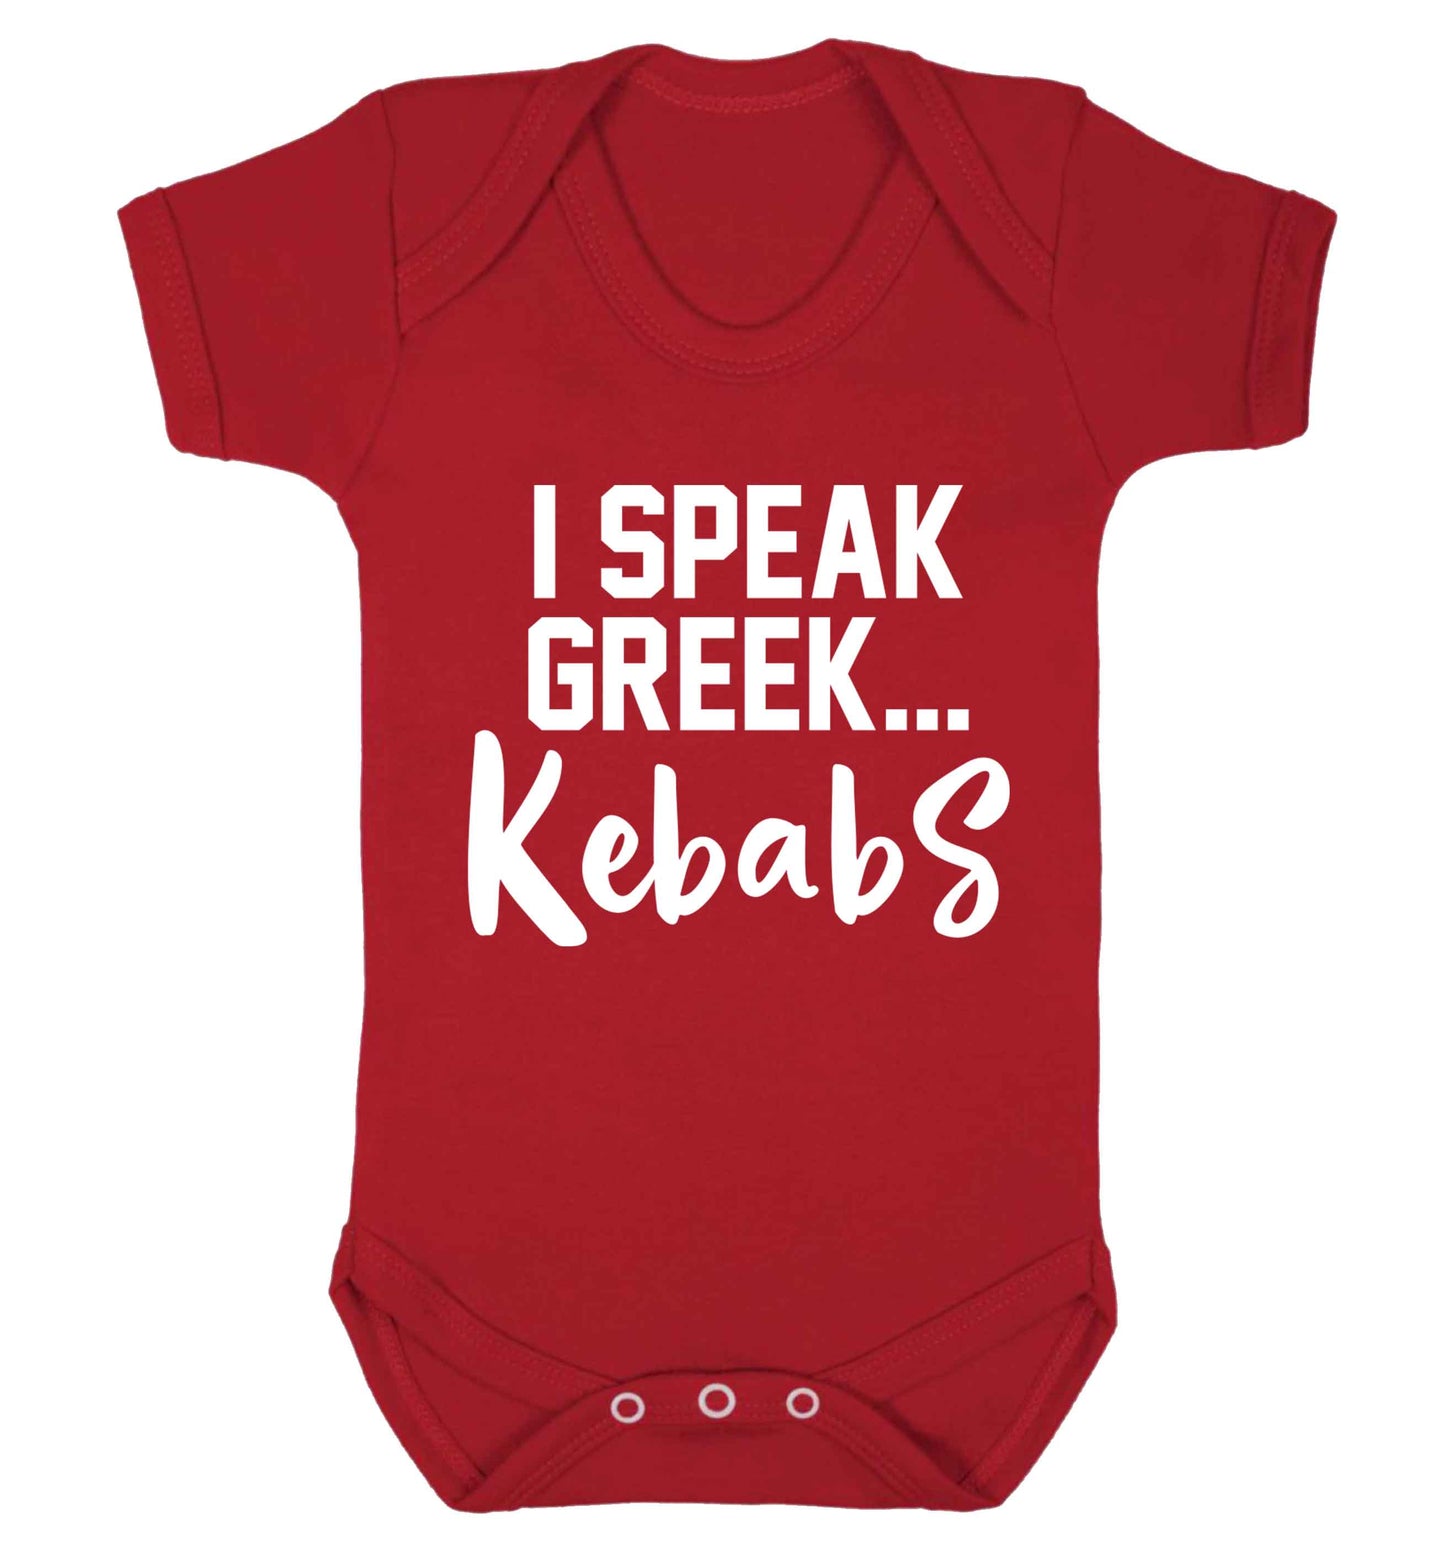 I speak Greek...kebabs Baby Vest red 18-24 months